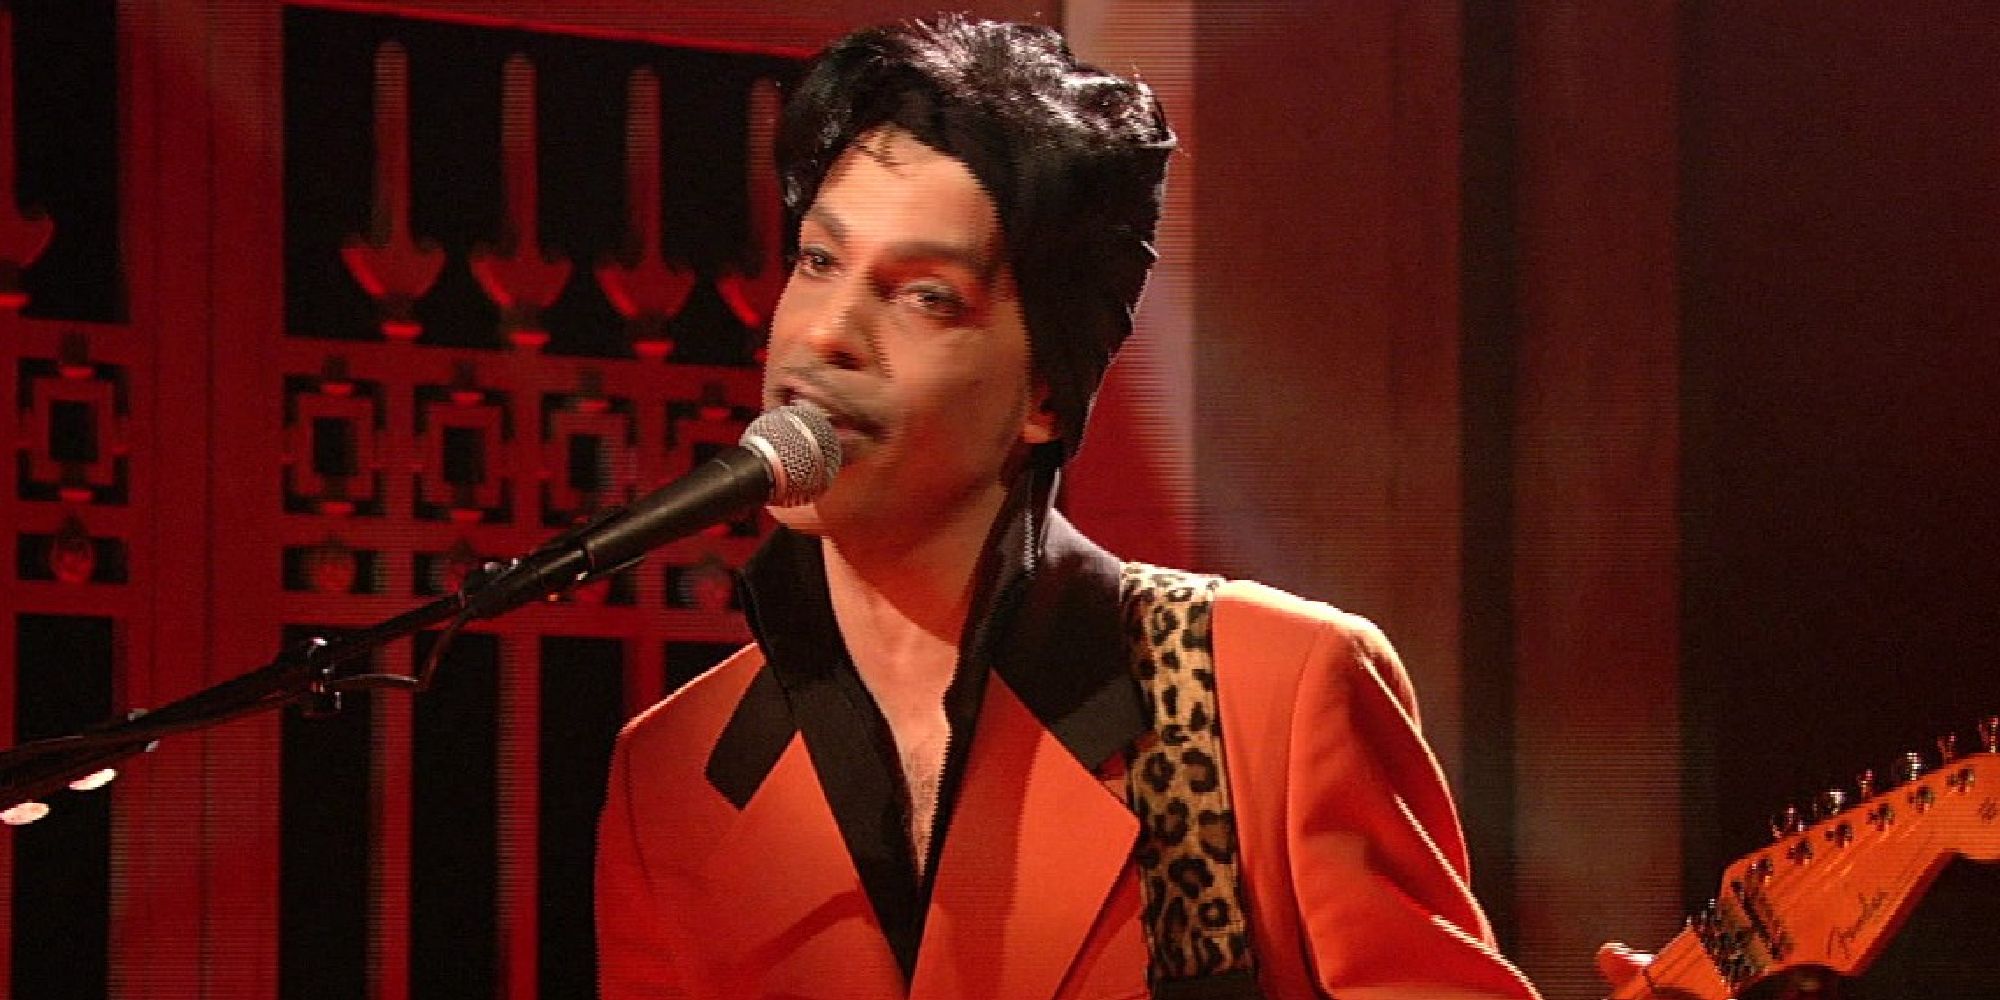 Prince performing "Fury" on SNL in 2006